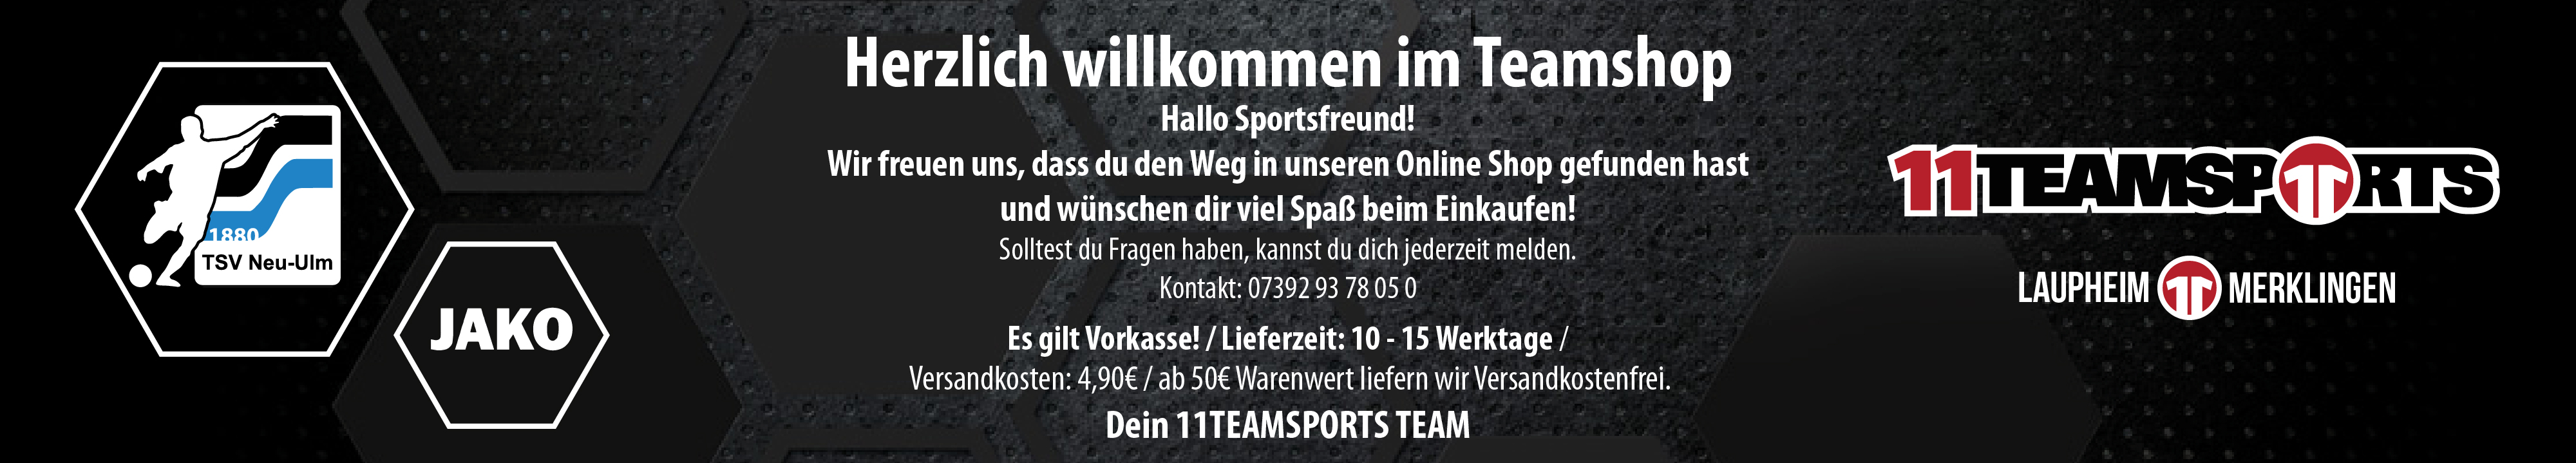 TSV Neu-Ulm Jugendfußball Title Image